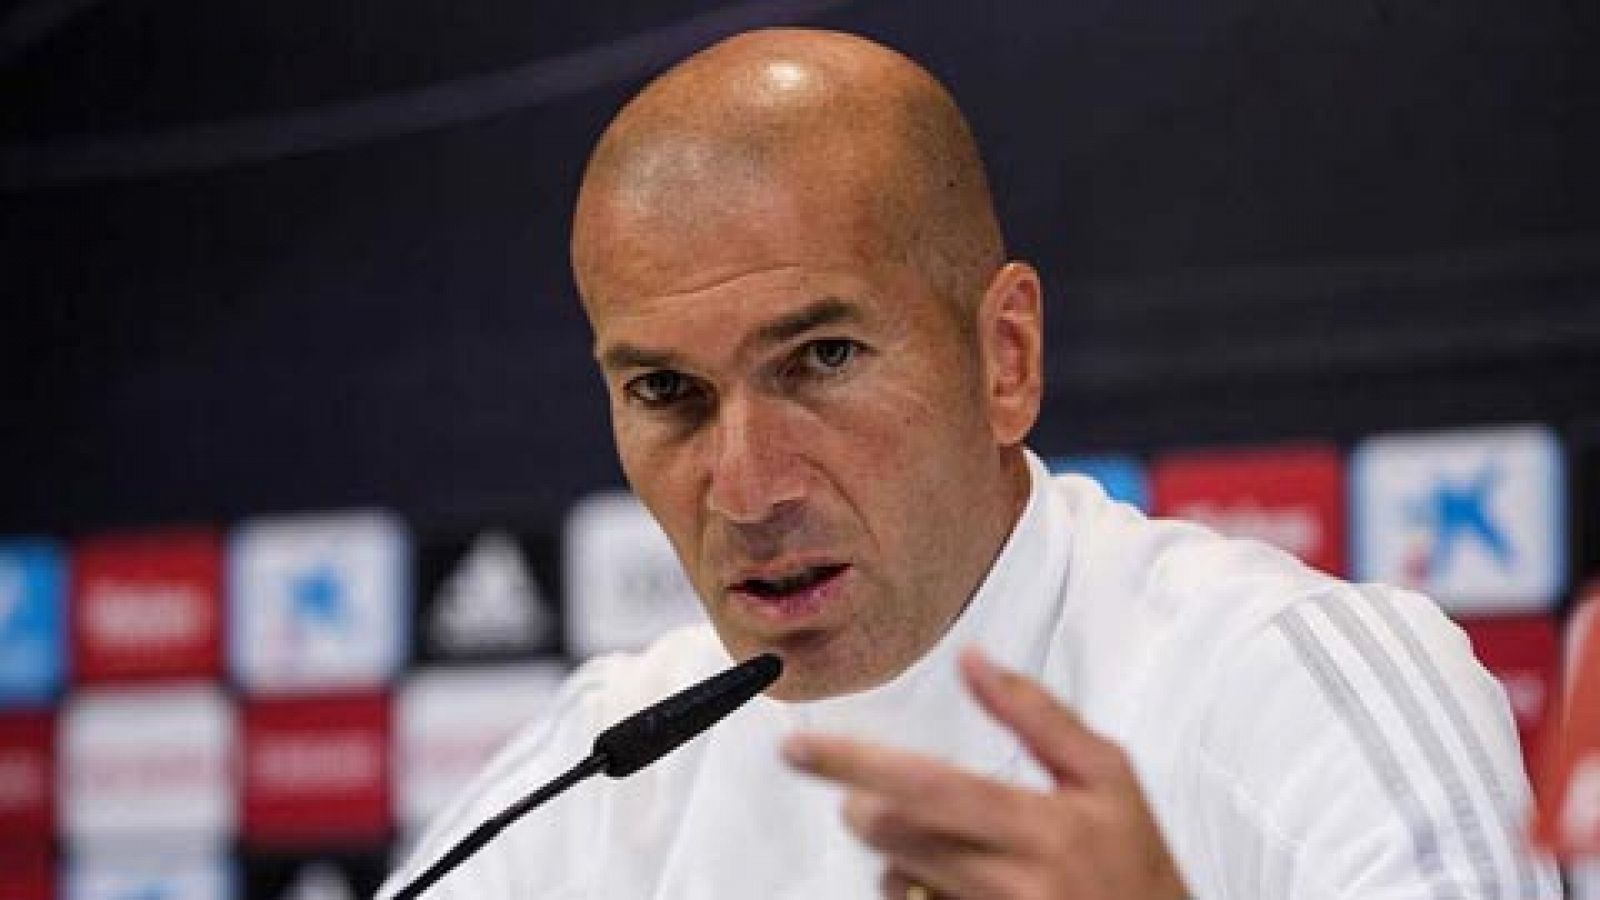 Telediario 1: Zidane pide paciencia con Bale | RTVE Play